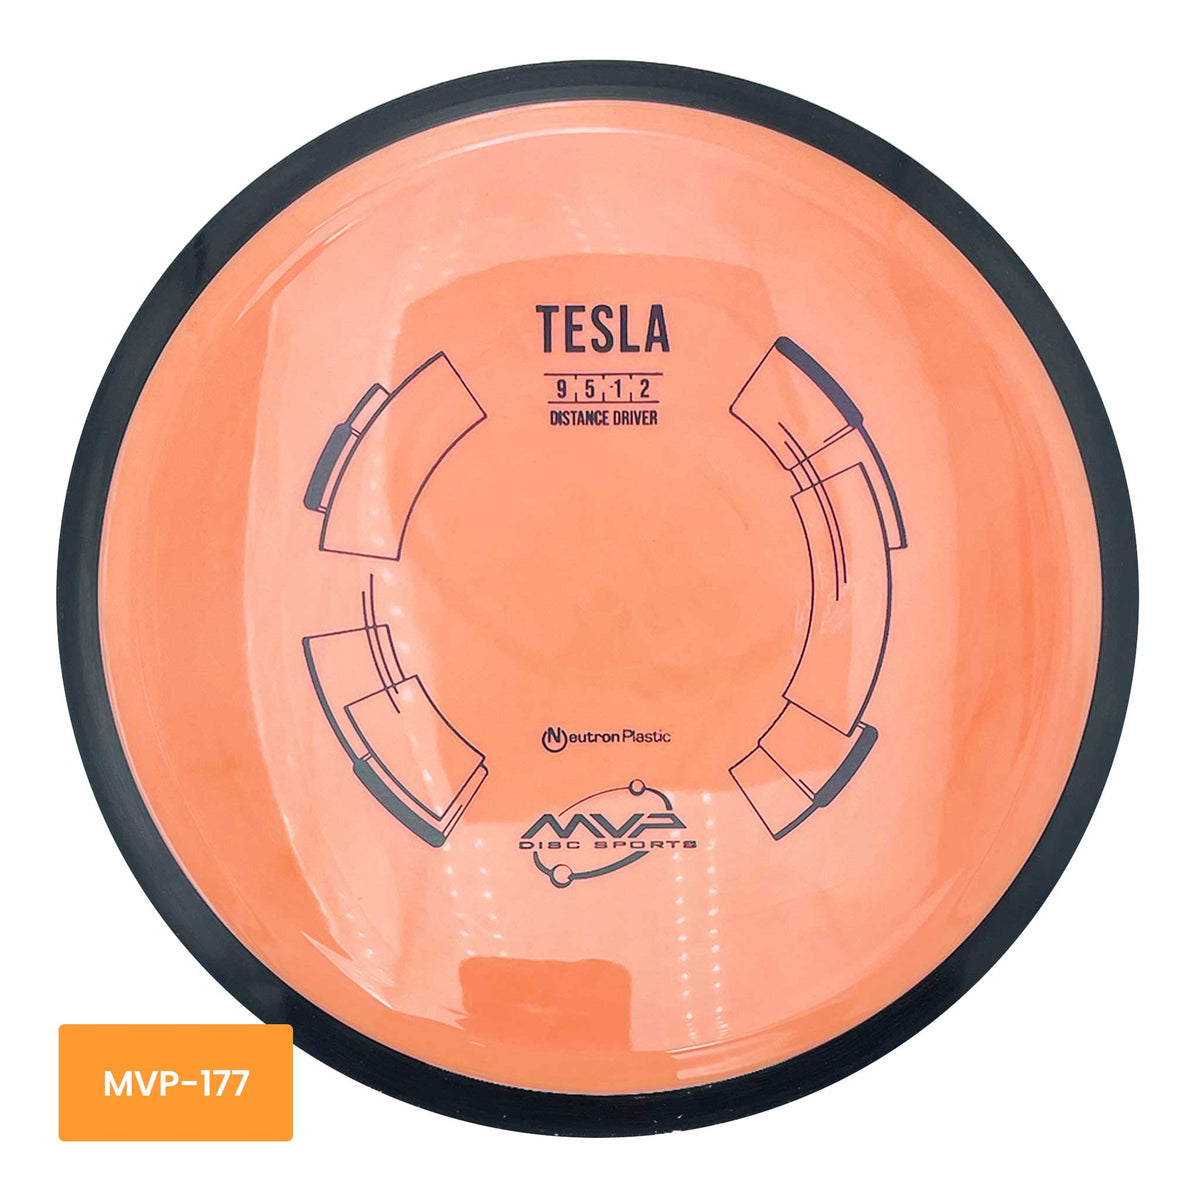 MVP Disc Sports Neutron Tesla distance driver - Orange